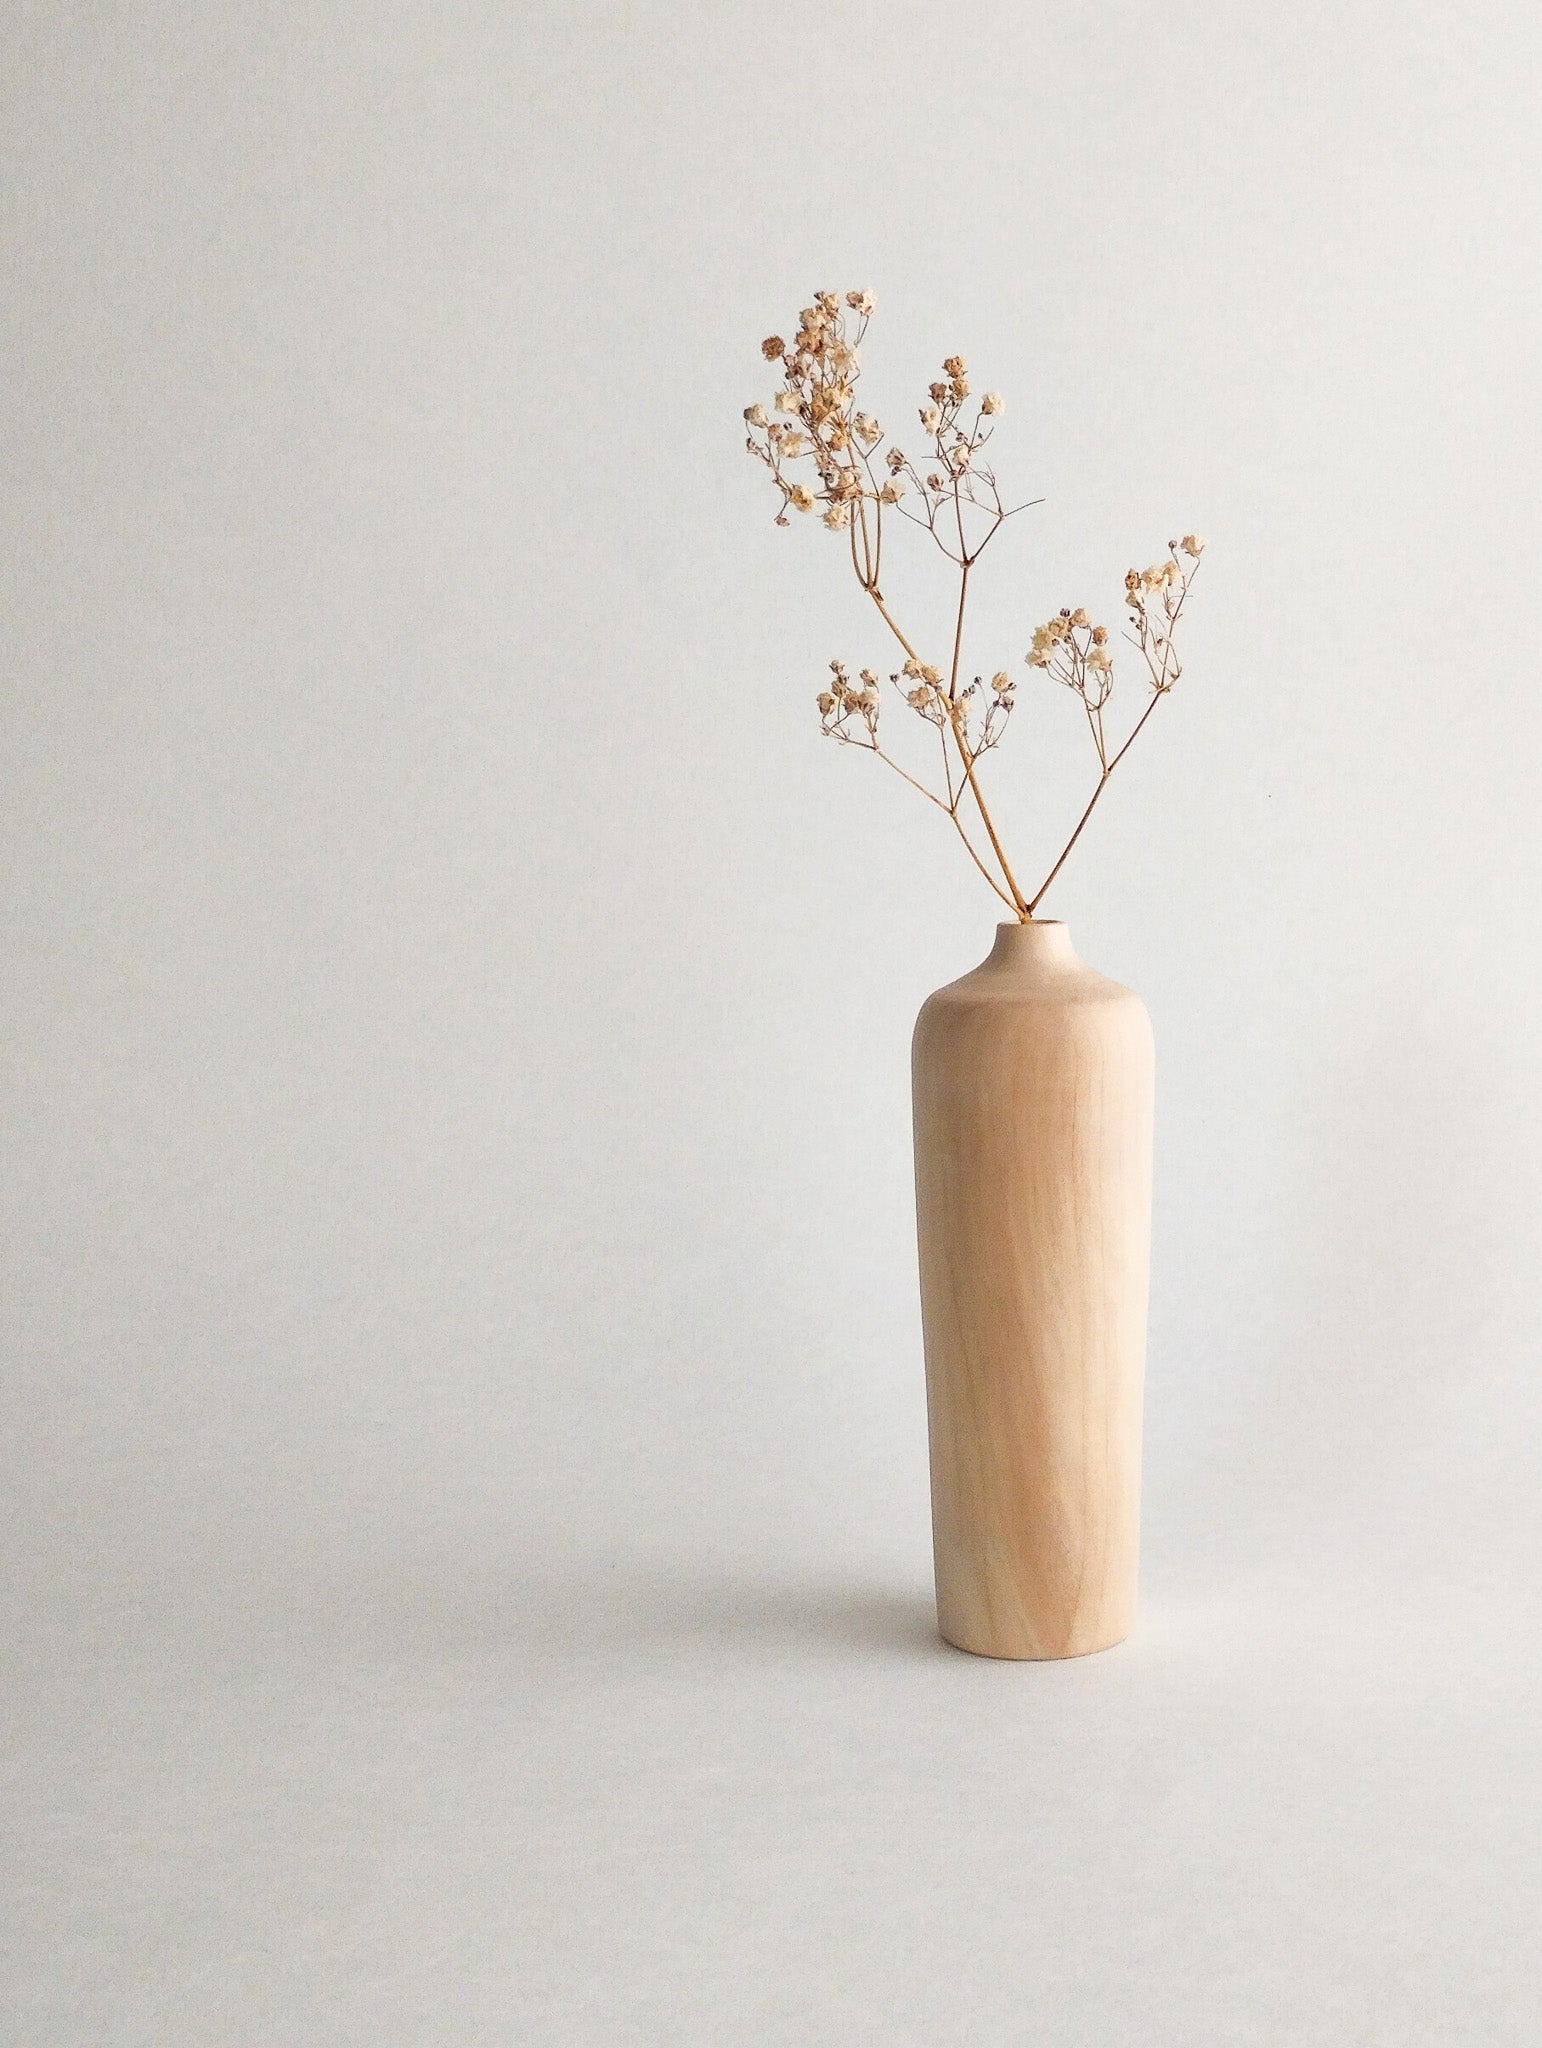 Mini vases - maple